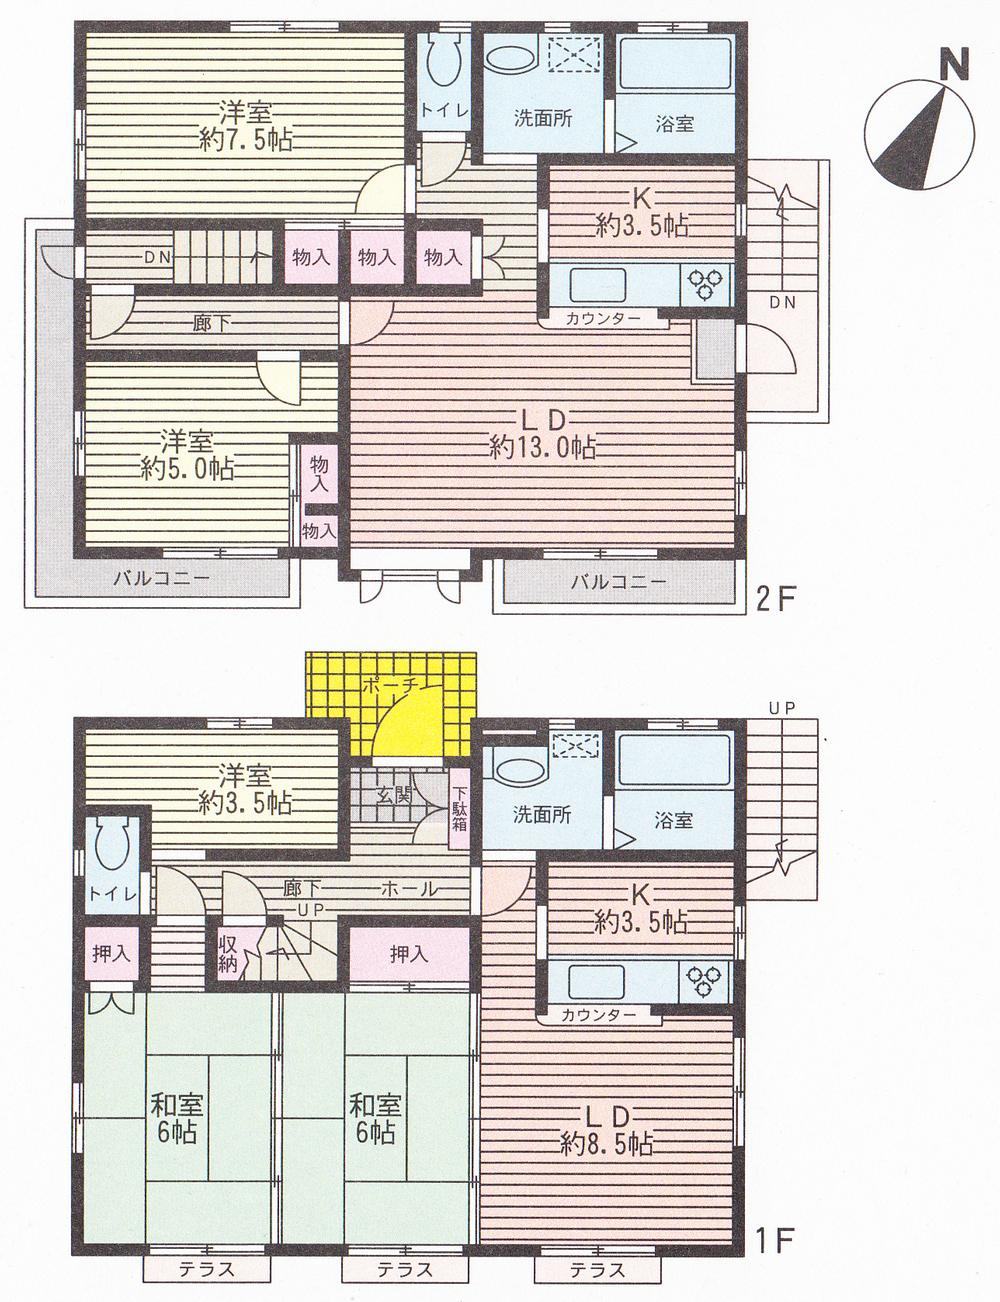 Floor plan. 37,800,000 yen, 4LLDDKK + S (storeroom), Land area 181.06 sq m , Building area 138.93 sq m 1 floor 2LDK + S2 floor 2LDK